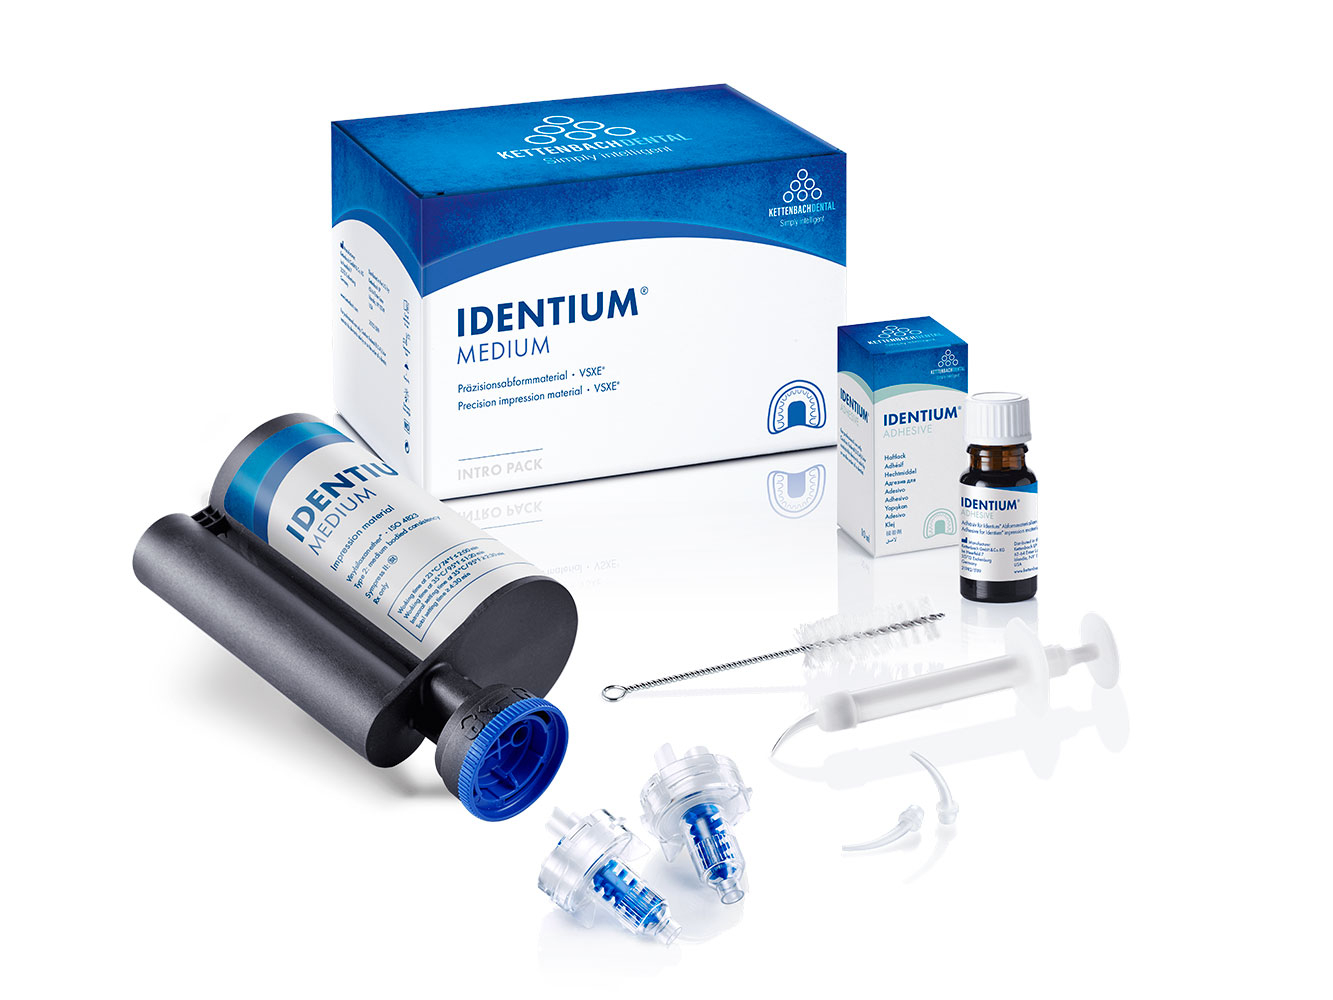 Стоматологический оттискный материал Kettenbach Identium Medium Intro pack, 14716, Kettenbach (Германия), 380 ml и акссесуары